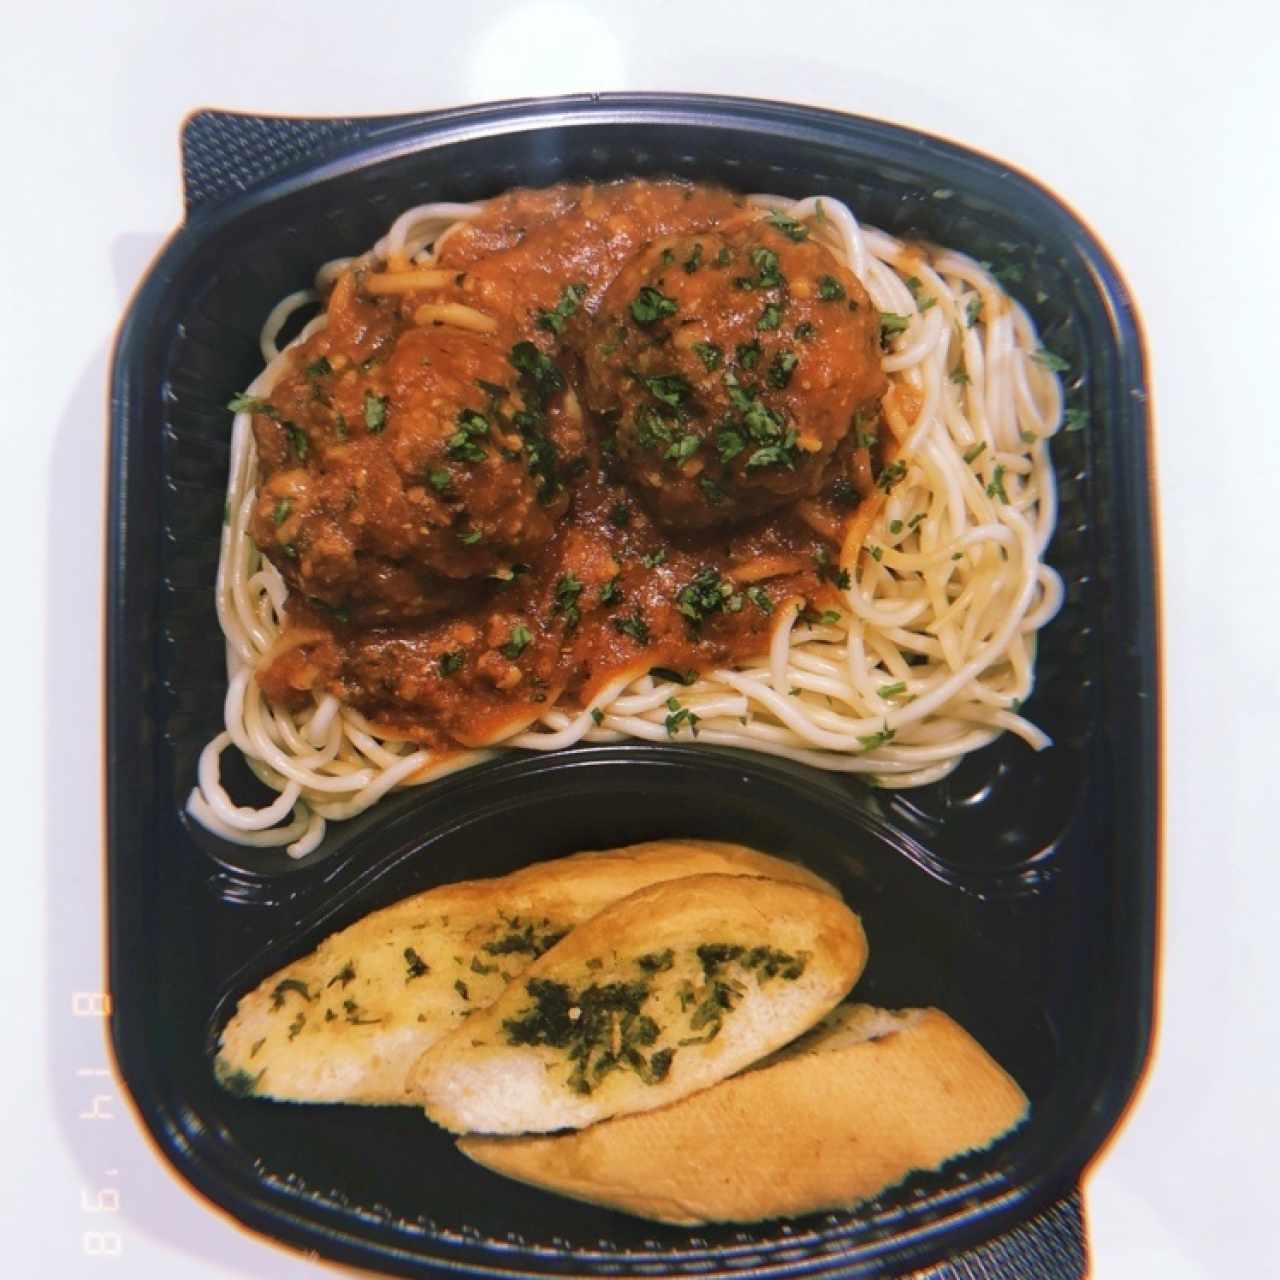 spaghetti con meatballs en salsa roja y pan al ajo